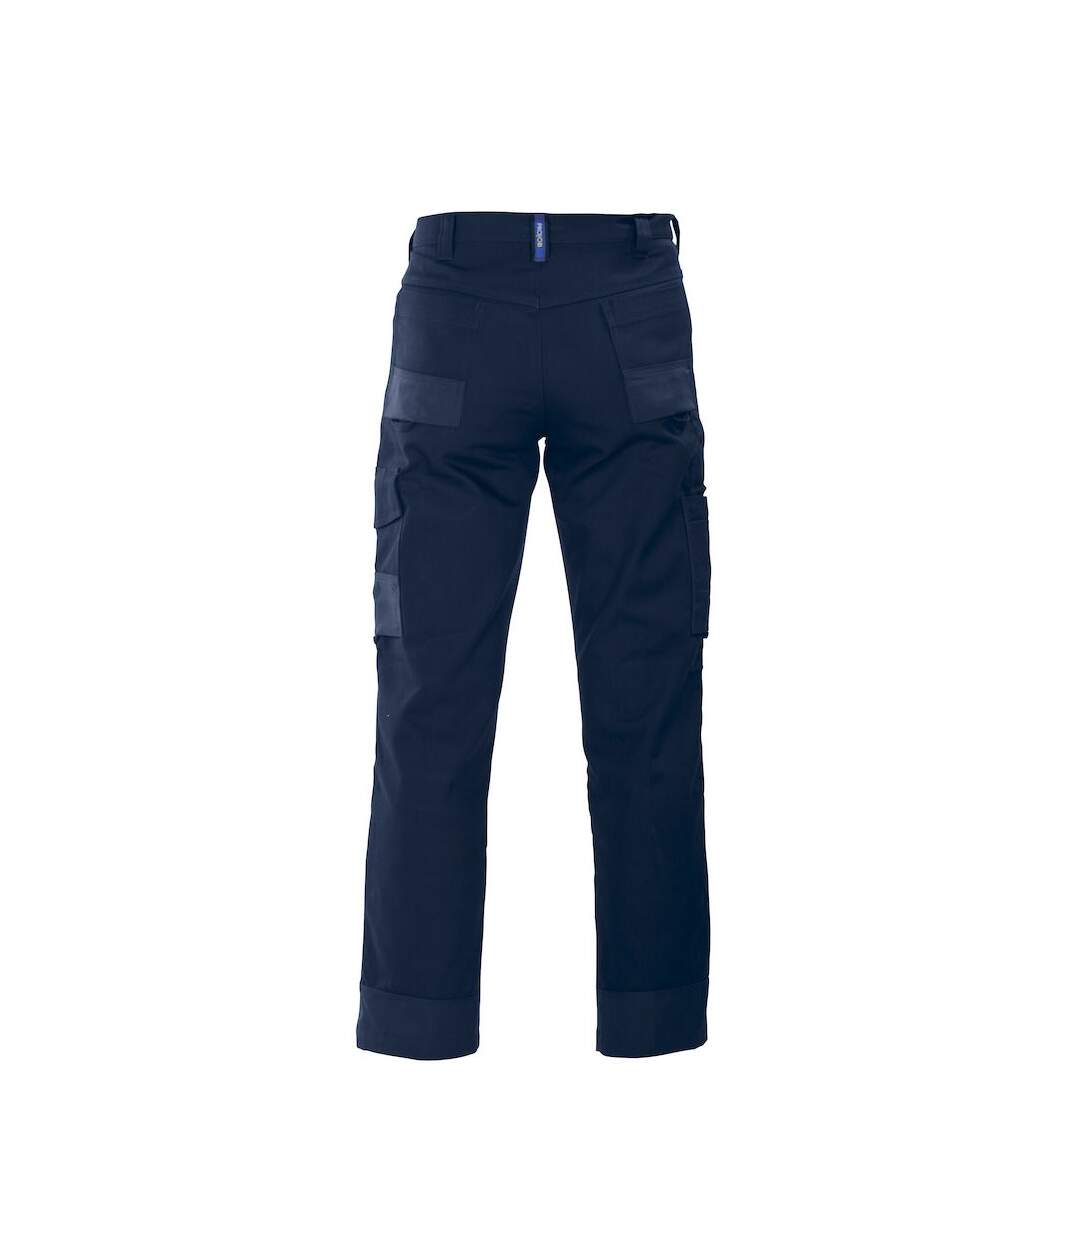 Projob - Pantalon cargo - Homme (Bleu marine) - UTUB206